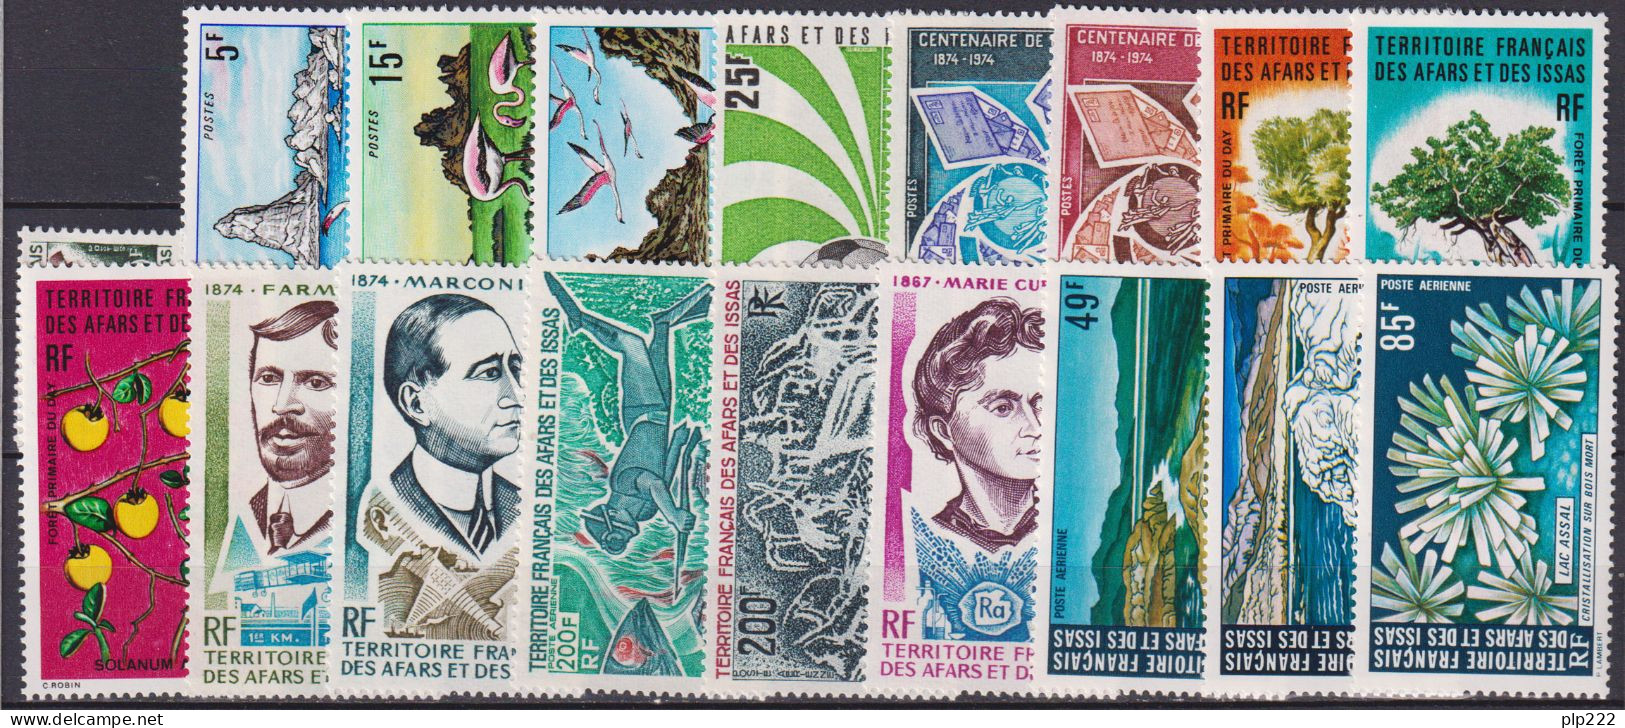 Afars Et Des Issas 1974 Annata Completa / Complete Year Set **/MNH VF - Unused Stamps